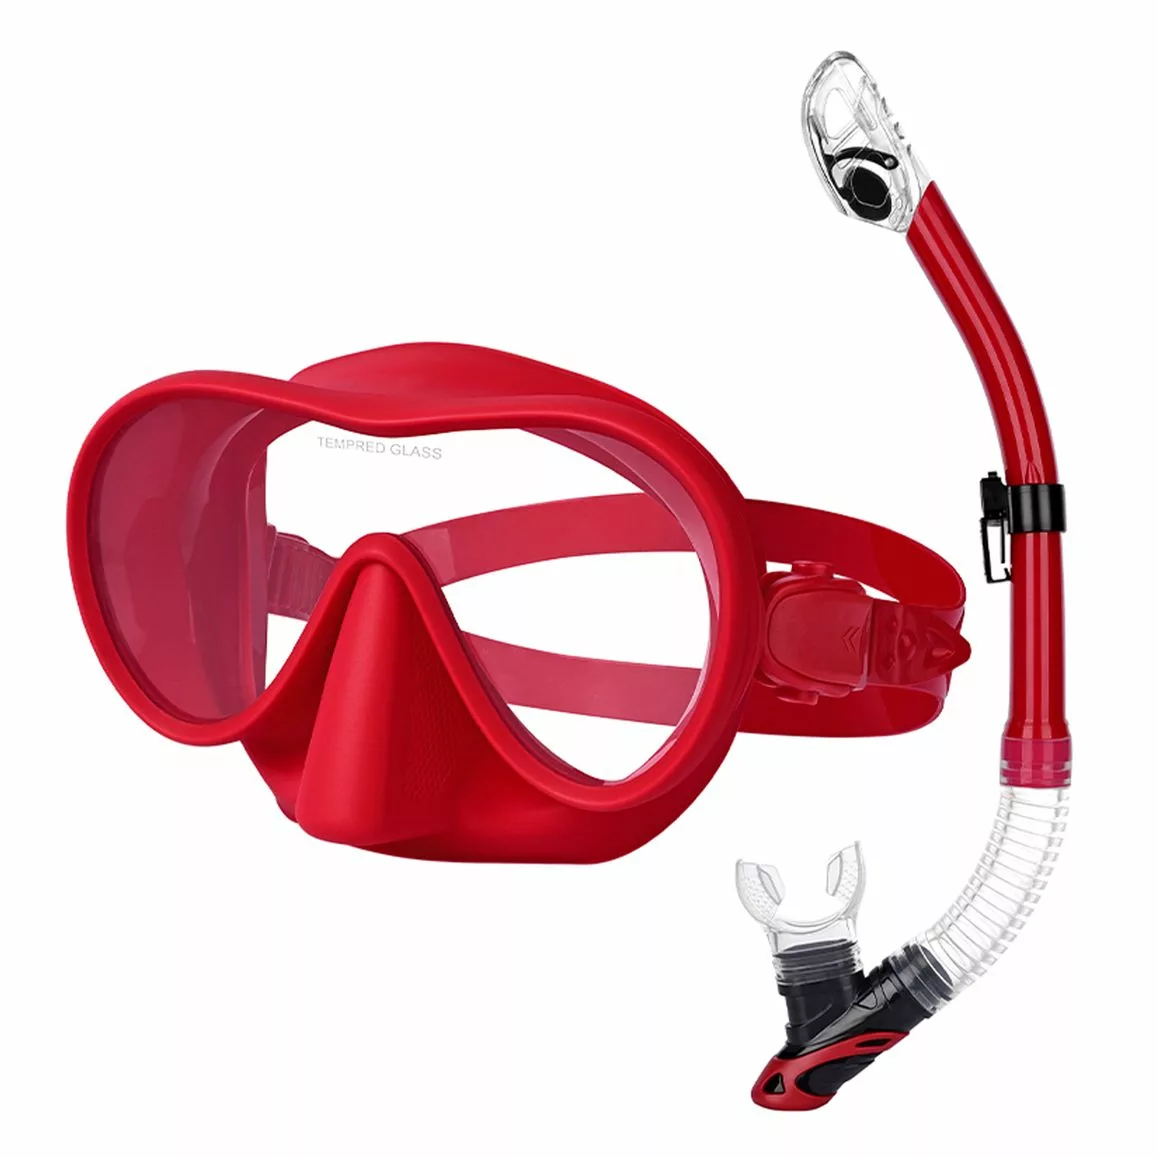 Tecline Frameless Sv Mask Size M/l + Snorkel, Red Set - Tecline